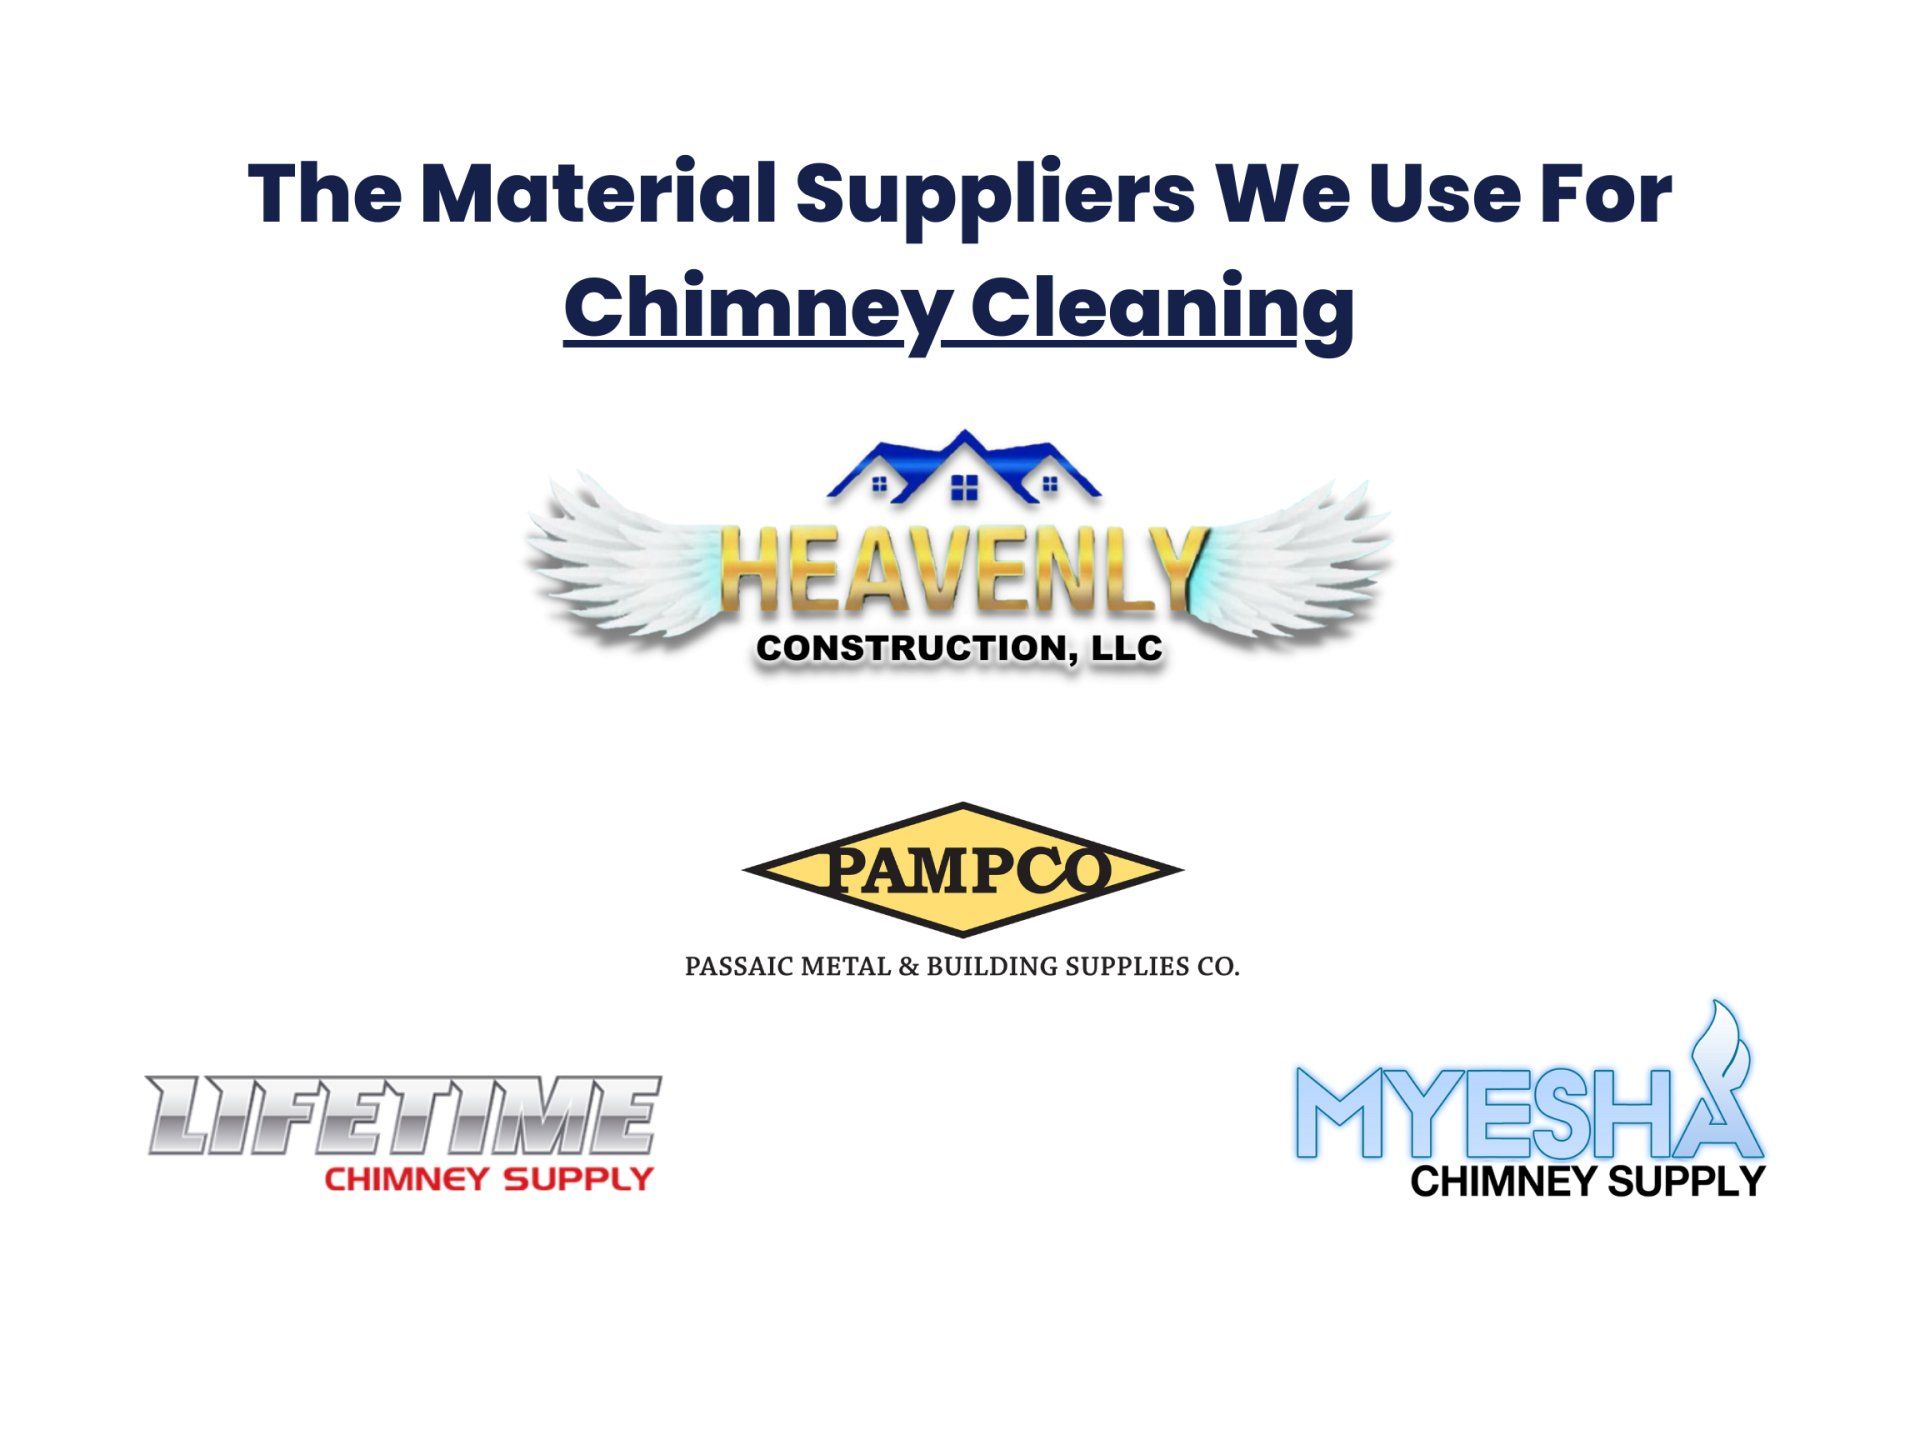 Lifetime Chimney Supply, Pampco Passaic Metal & Building Supplies Co. & Myesha Chimney Supply logos.